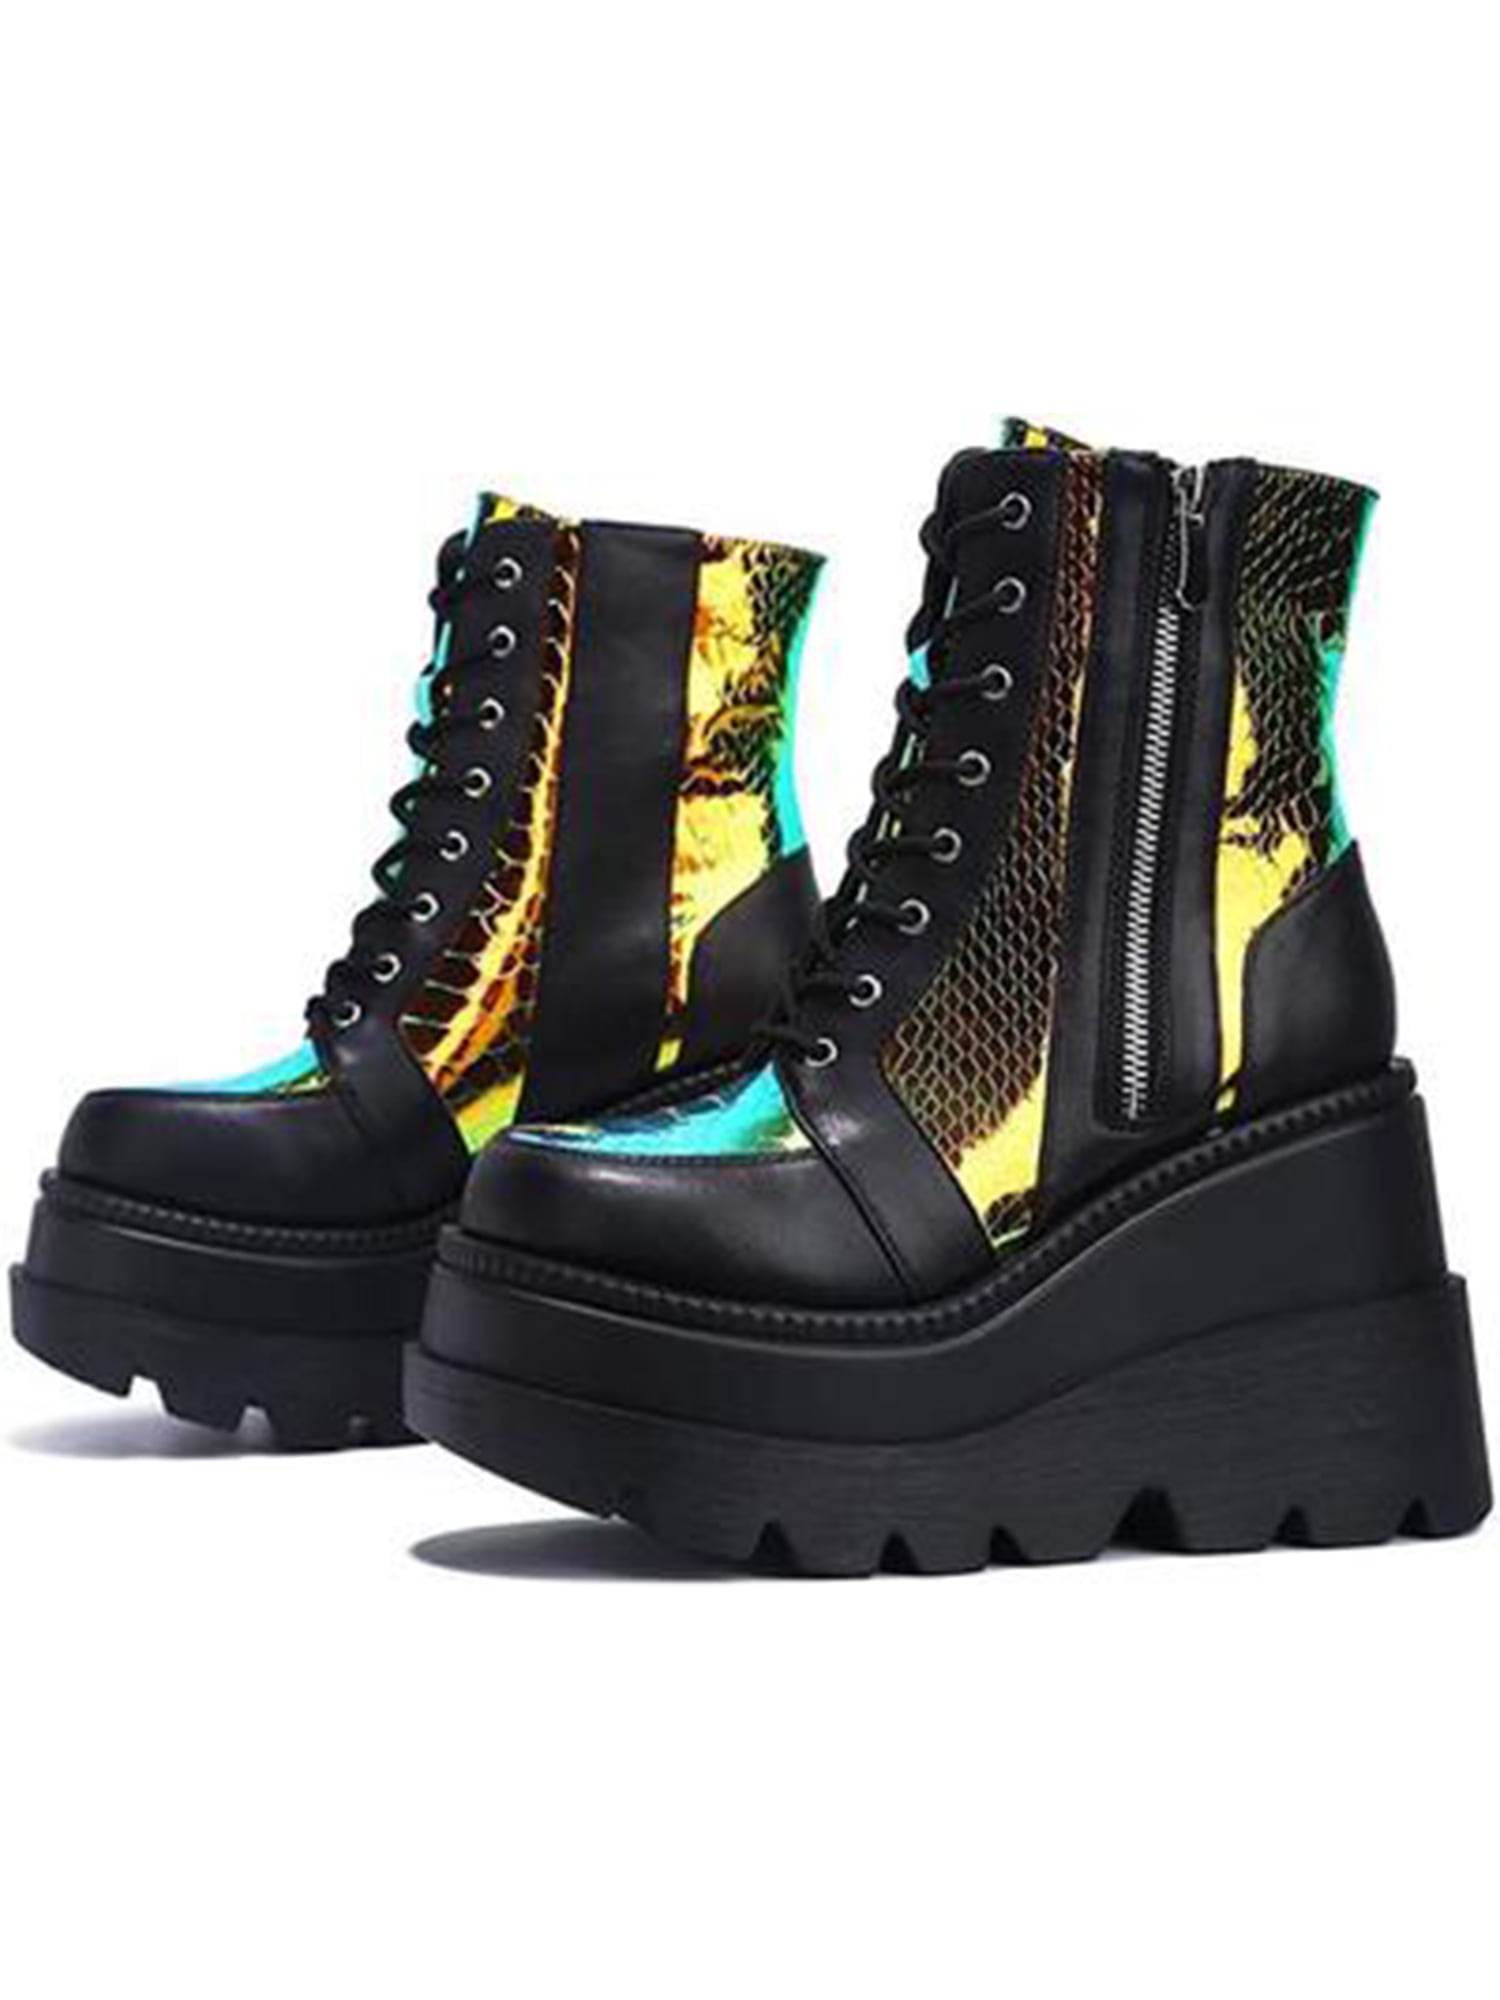 Details about   Women's Punk Lace Up Motor Combat High Platform Heel Block Shoes Ankle Boots 